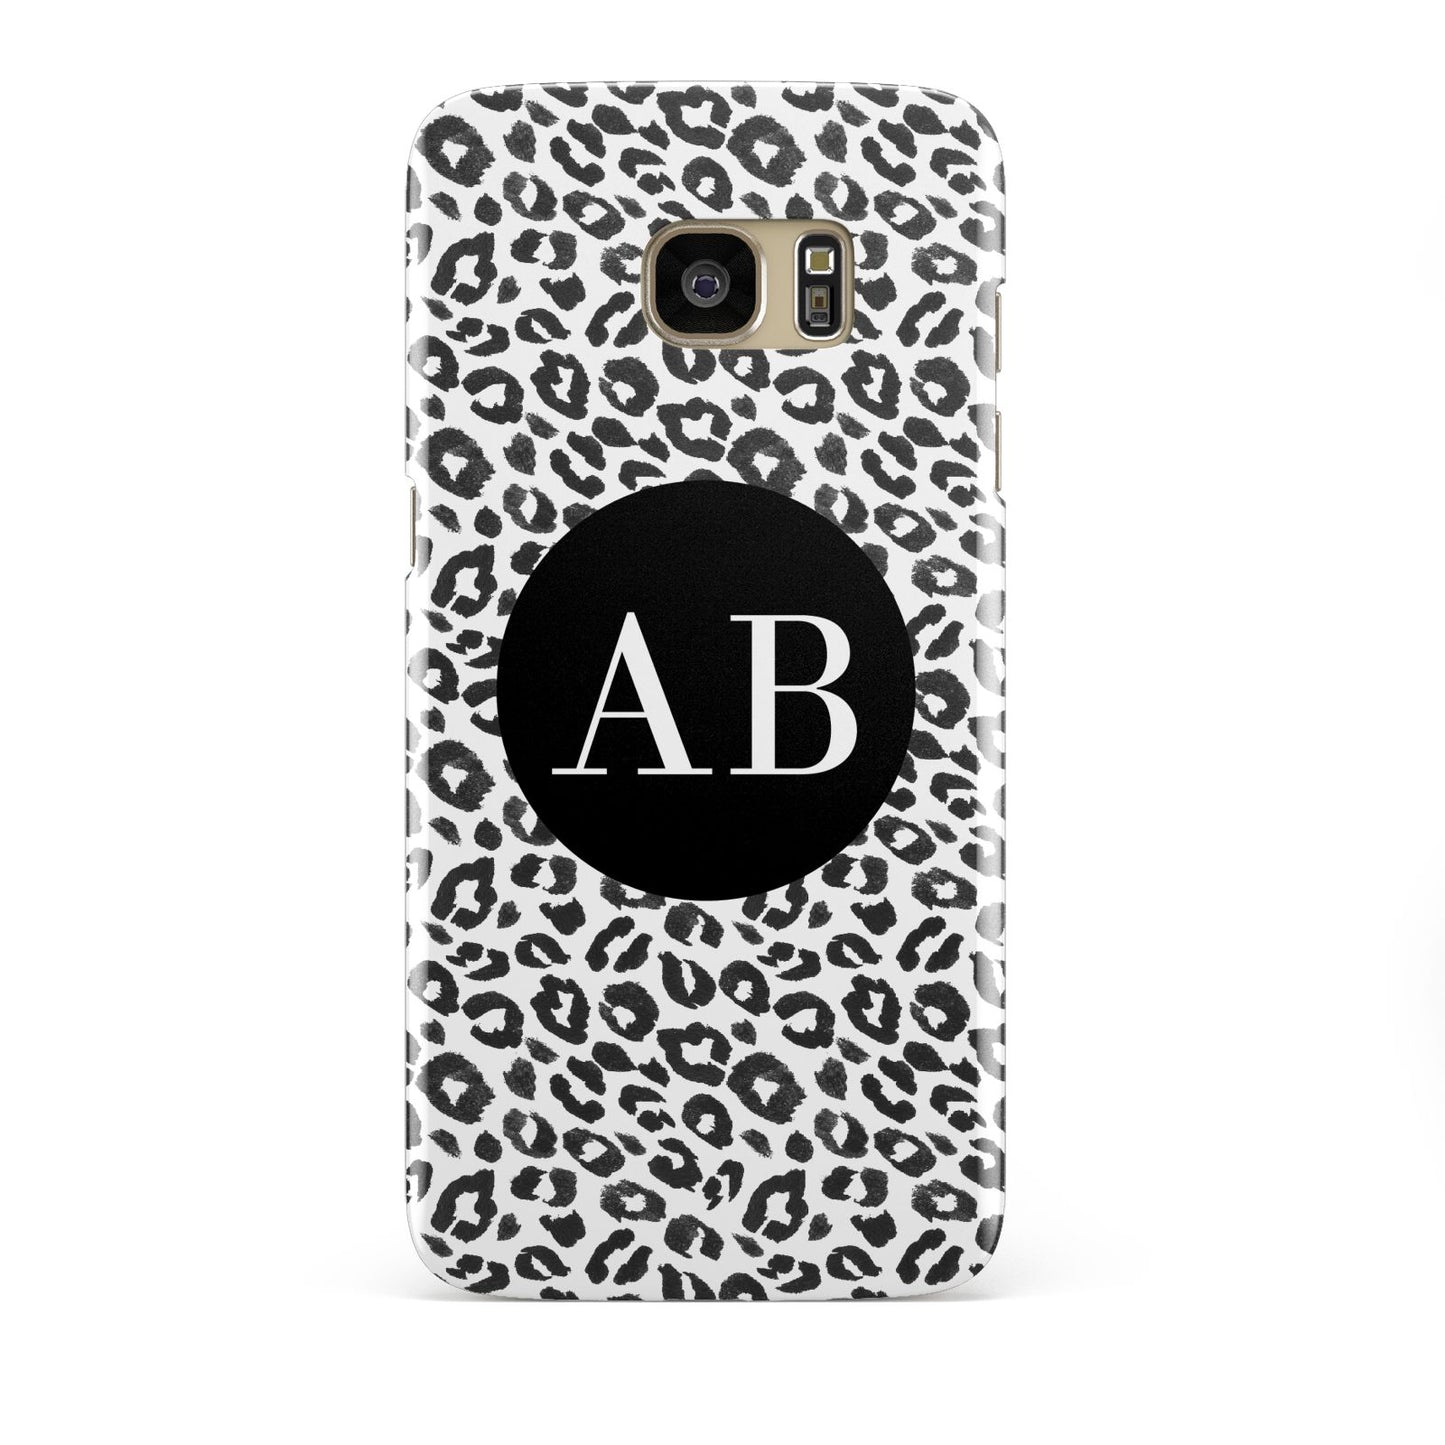 Leopard Print Black and White Samsung Galaxy S7 Edge Case